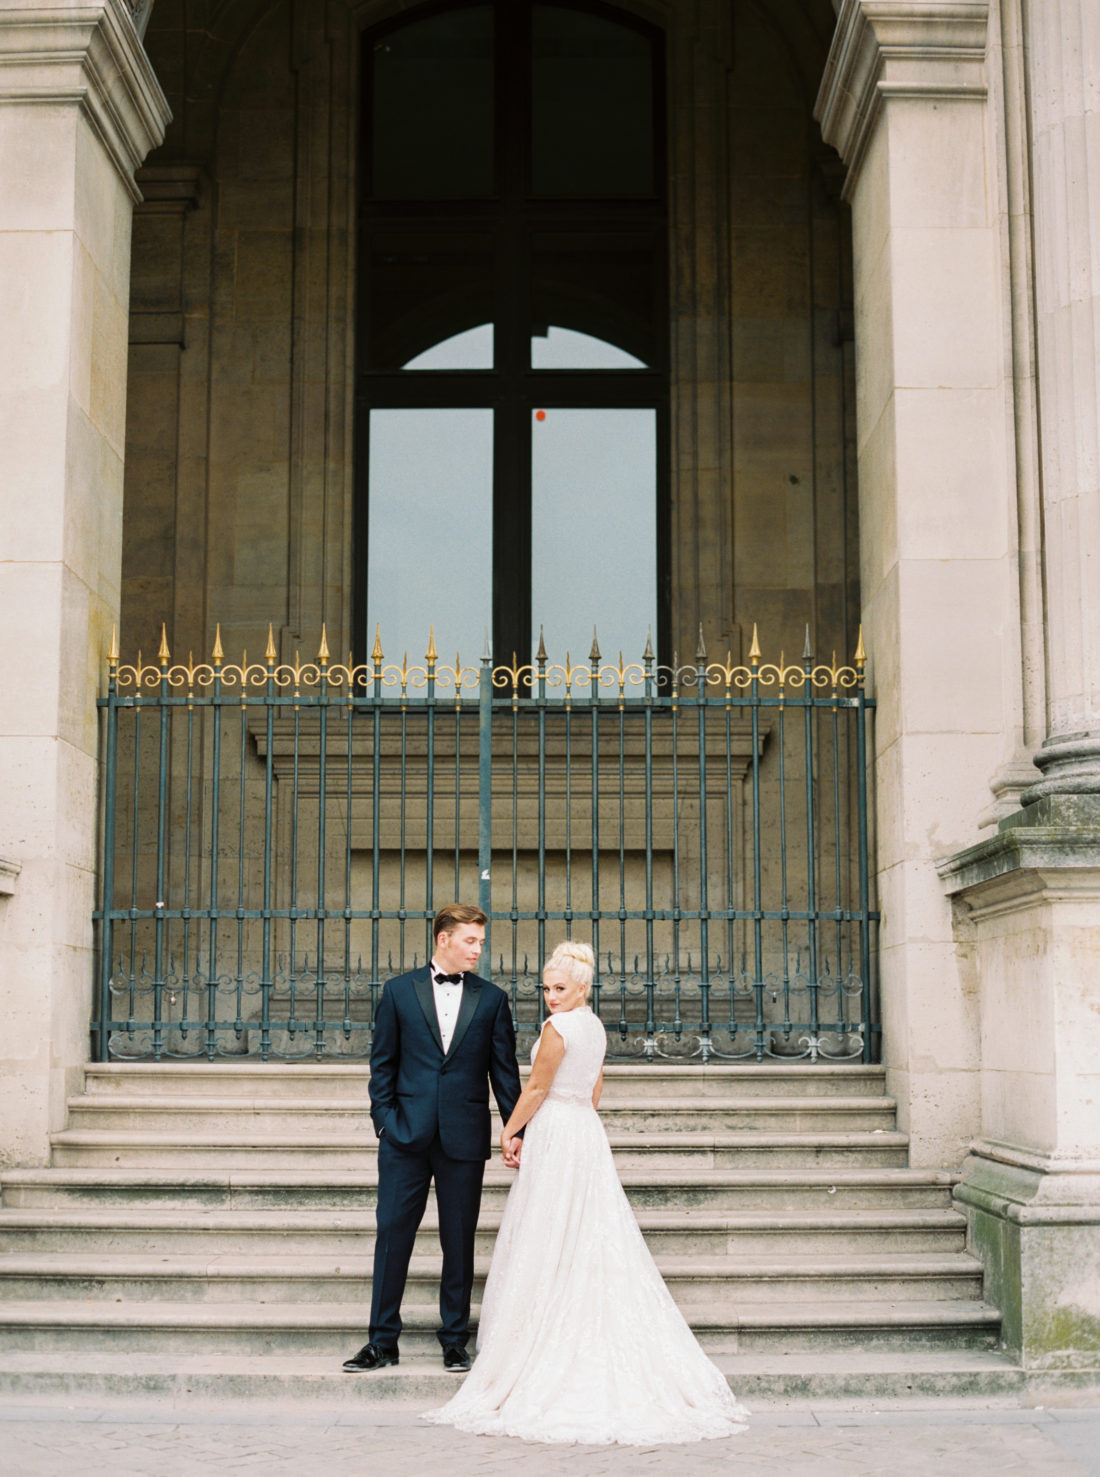 paris wedding planner rachael ellen events tips post photo 3